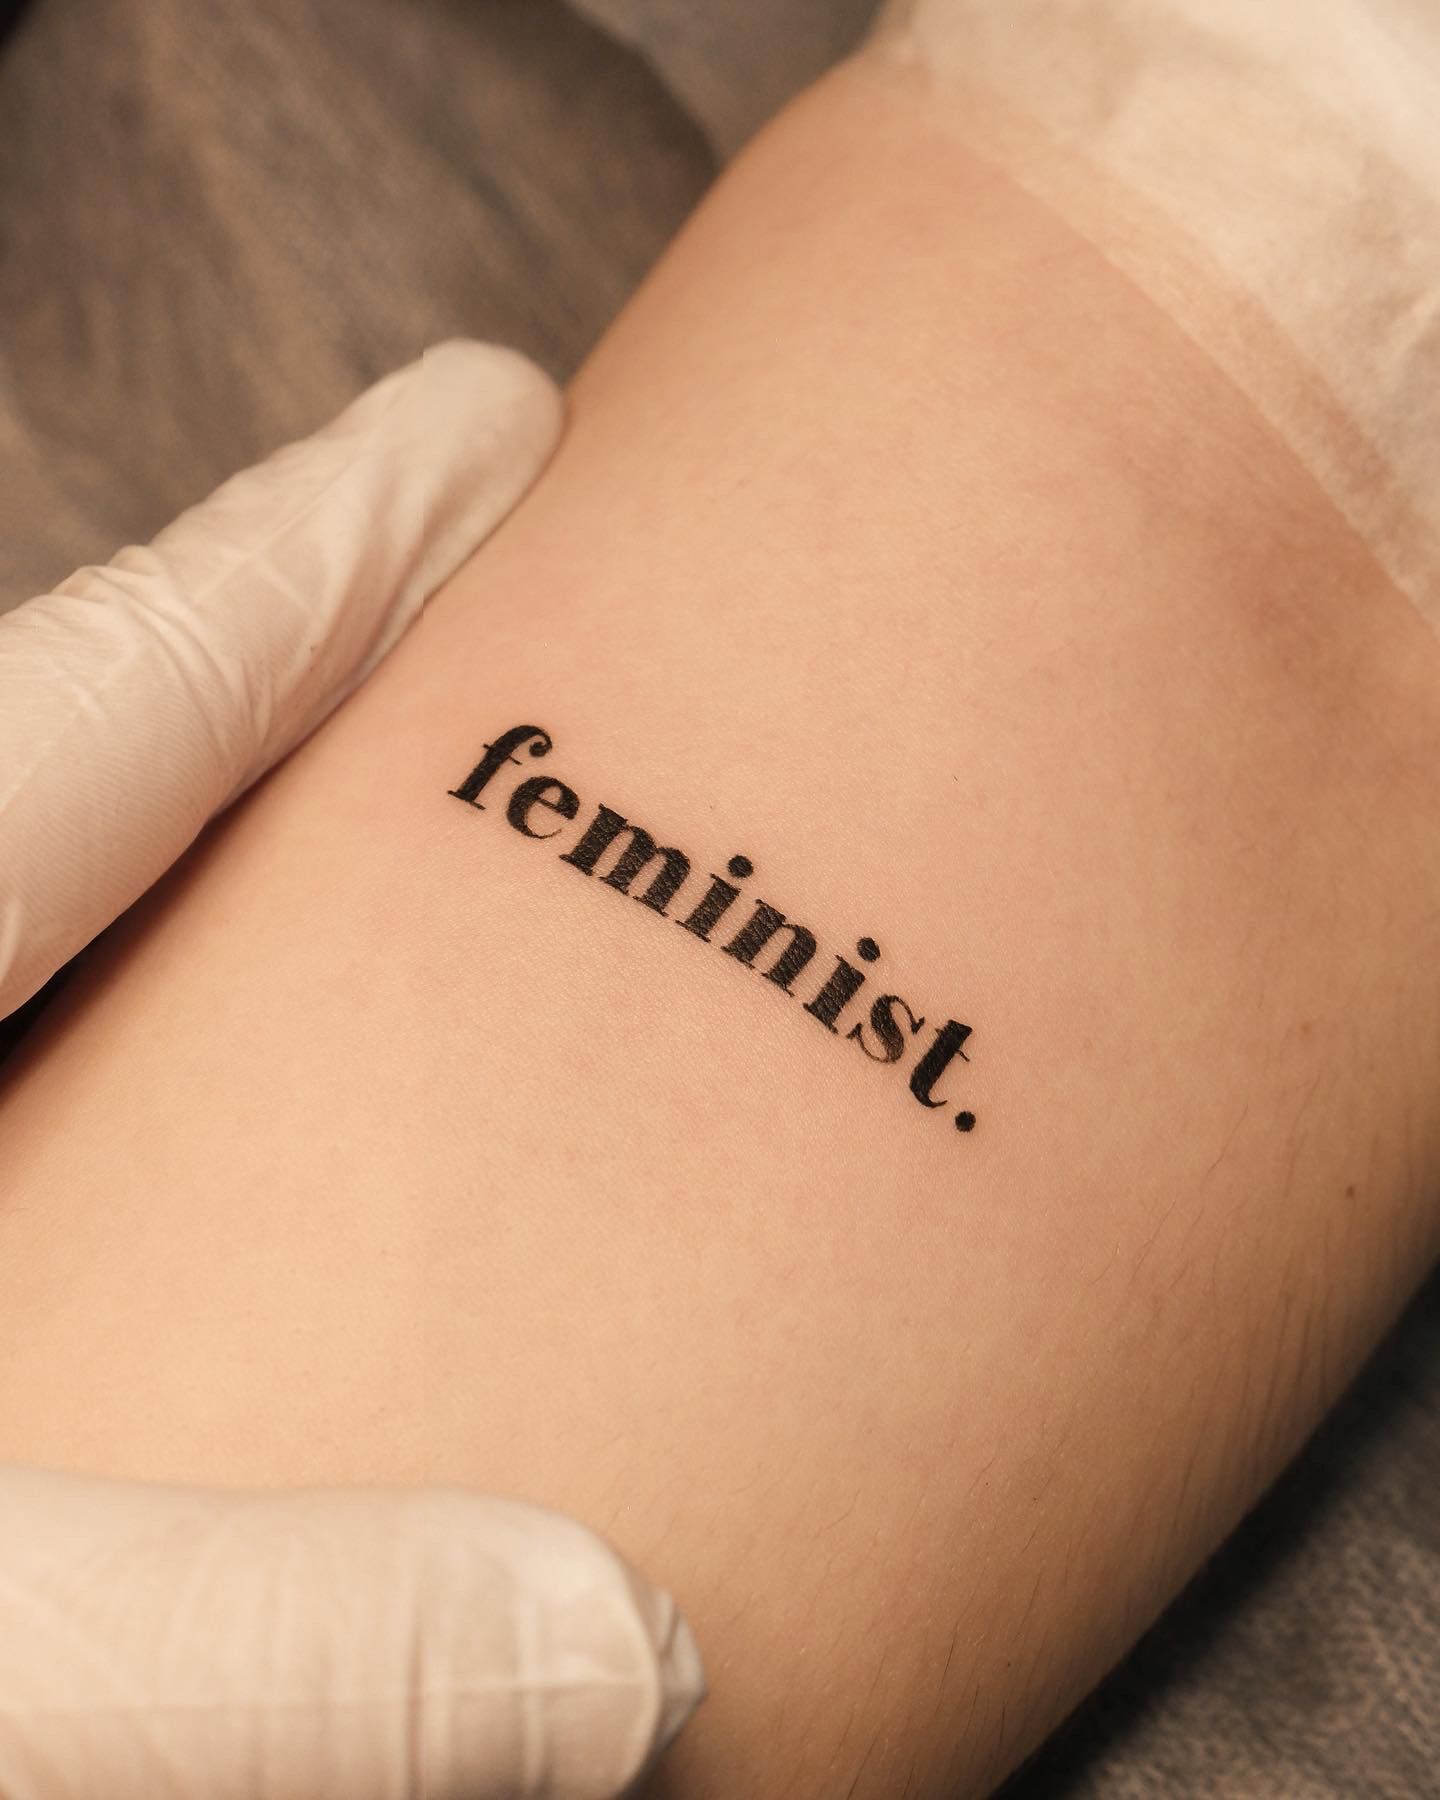 13 inch feminist tattoo on... - Nasty Tattoos & Piercing | Facebook